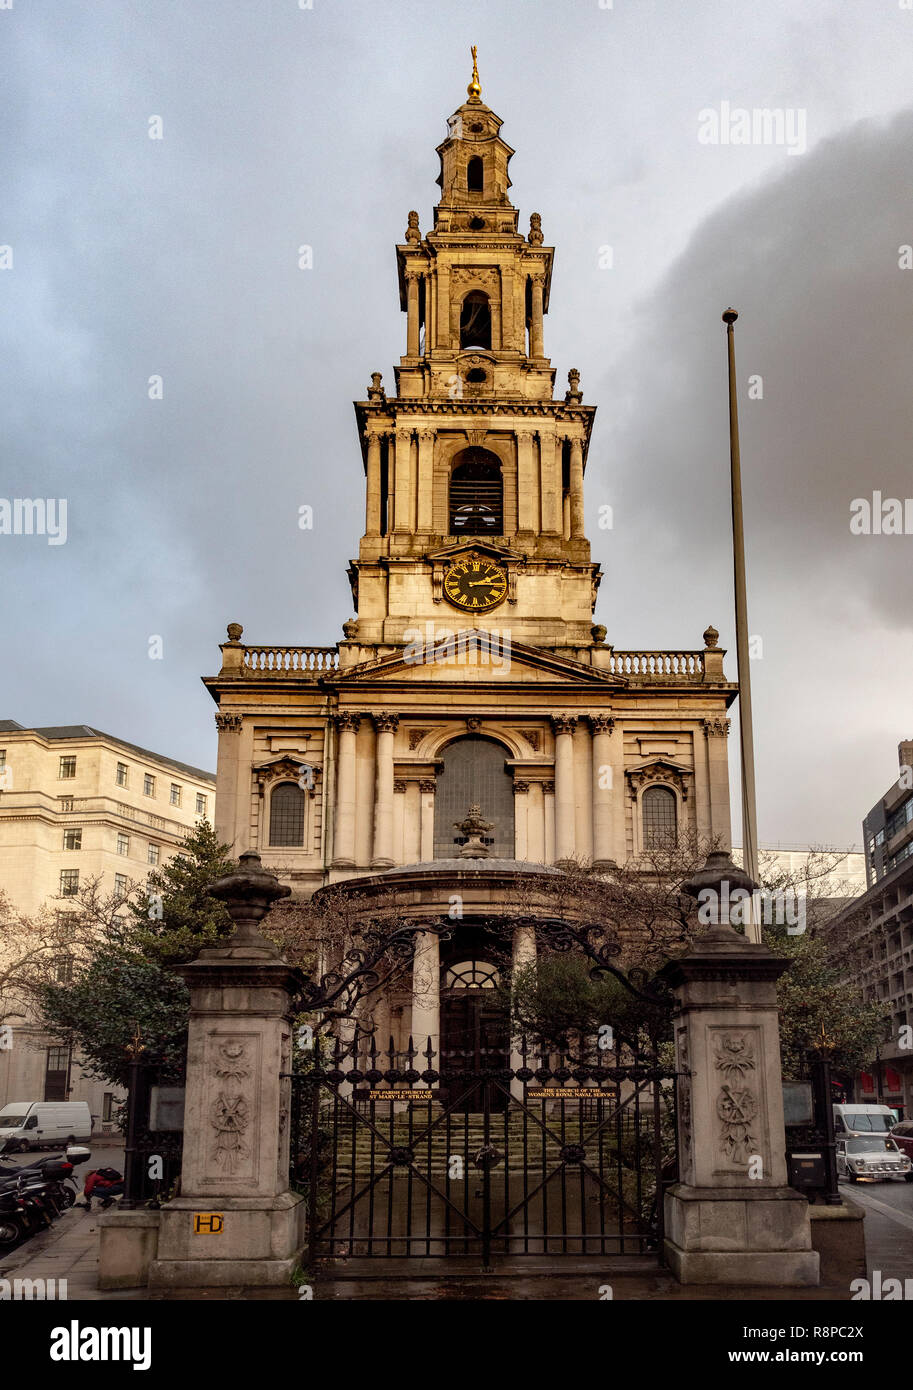 The Parish church of St Mary-Le-strand, The Strand, London, UK. Stock Photo